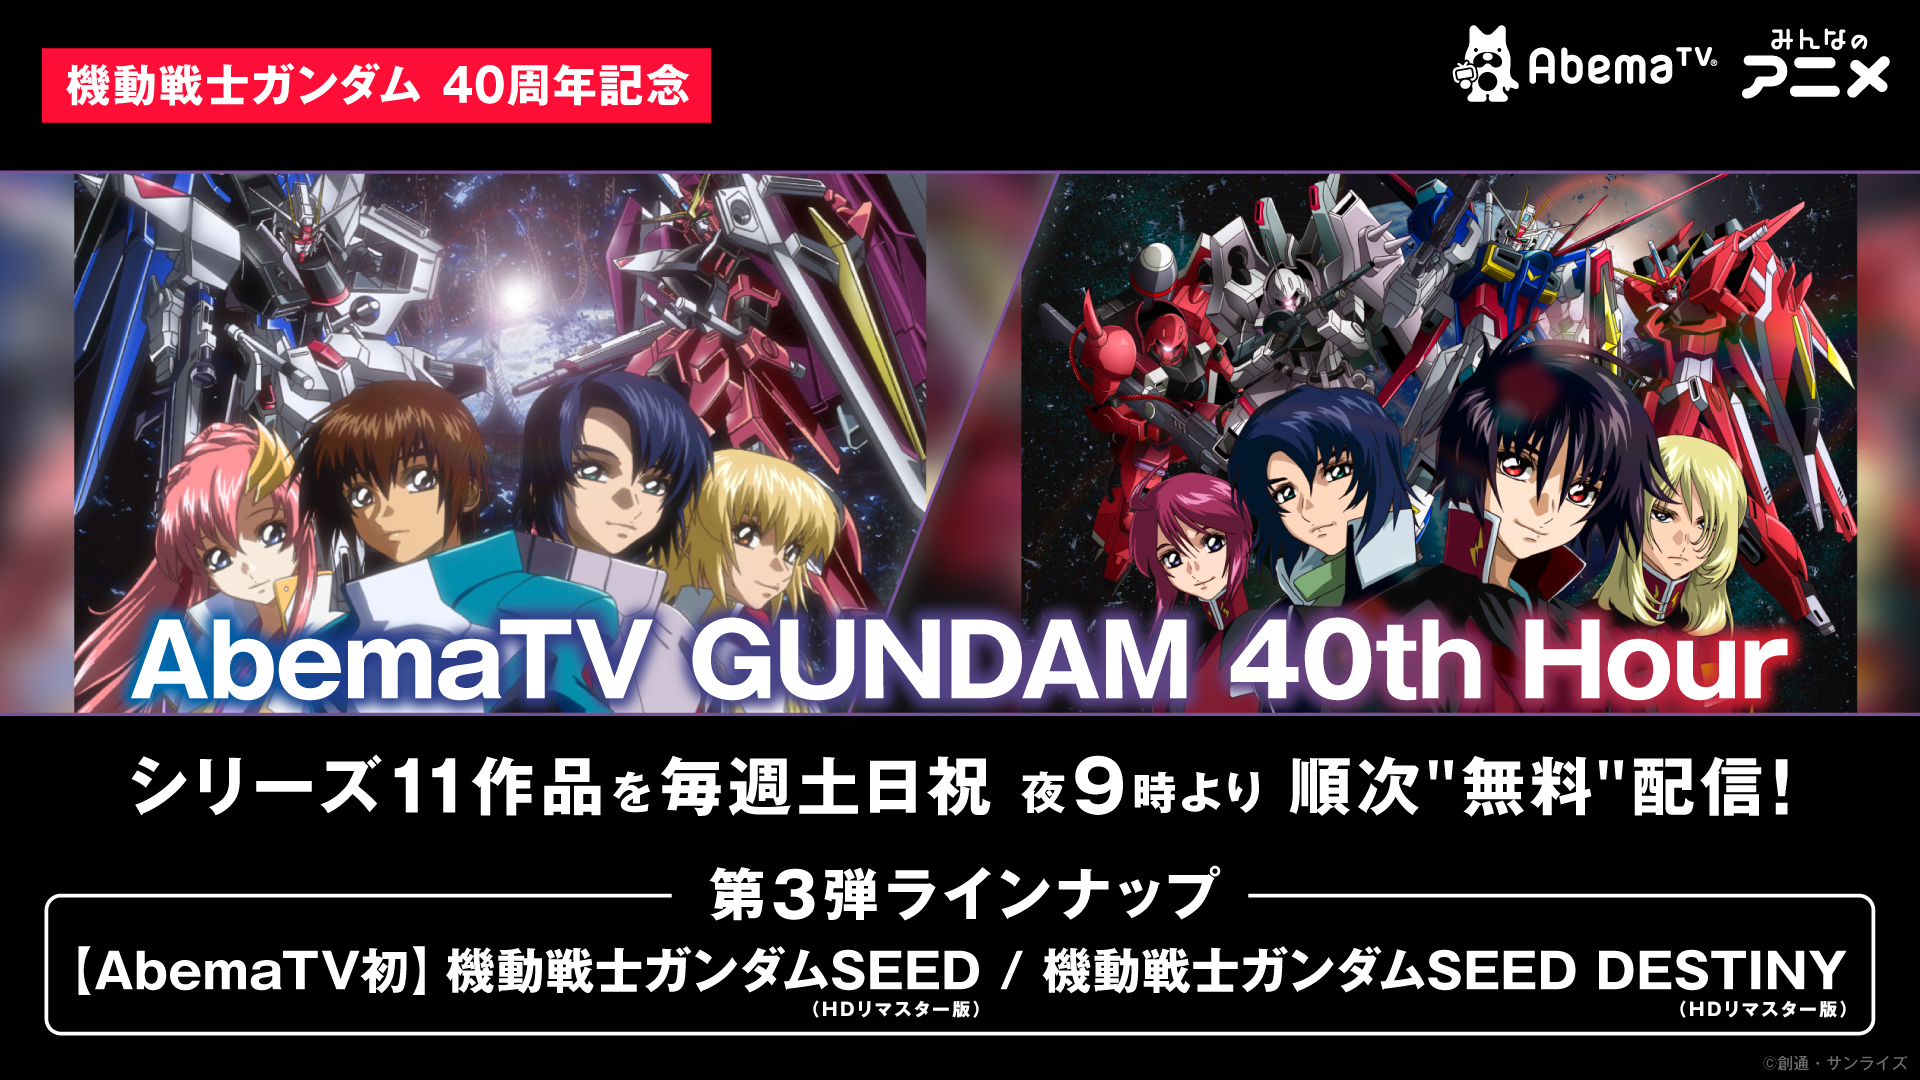 Abematv Gundam 40th Hour 第3弾発表 機動戦士ガンダム Seed 機動戦士ガンダム Seed Destiny 登場 アキバ総研